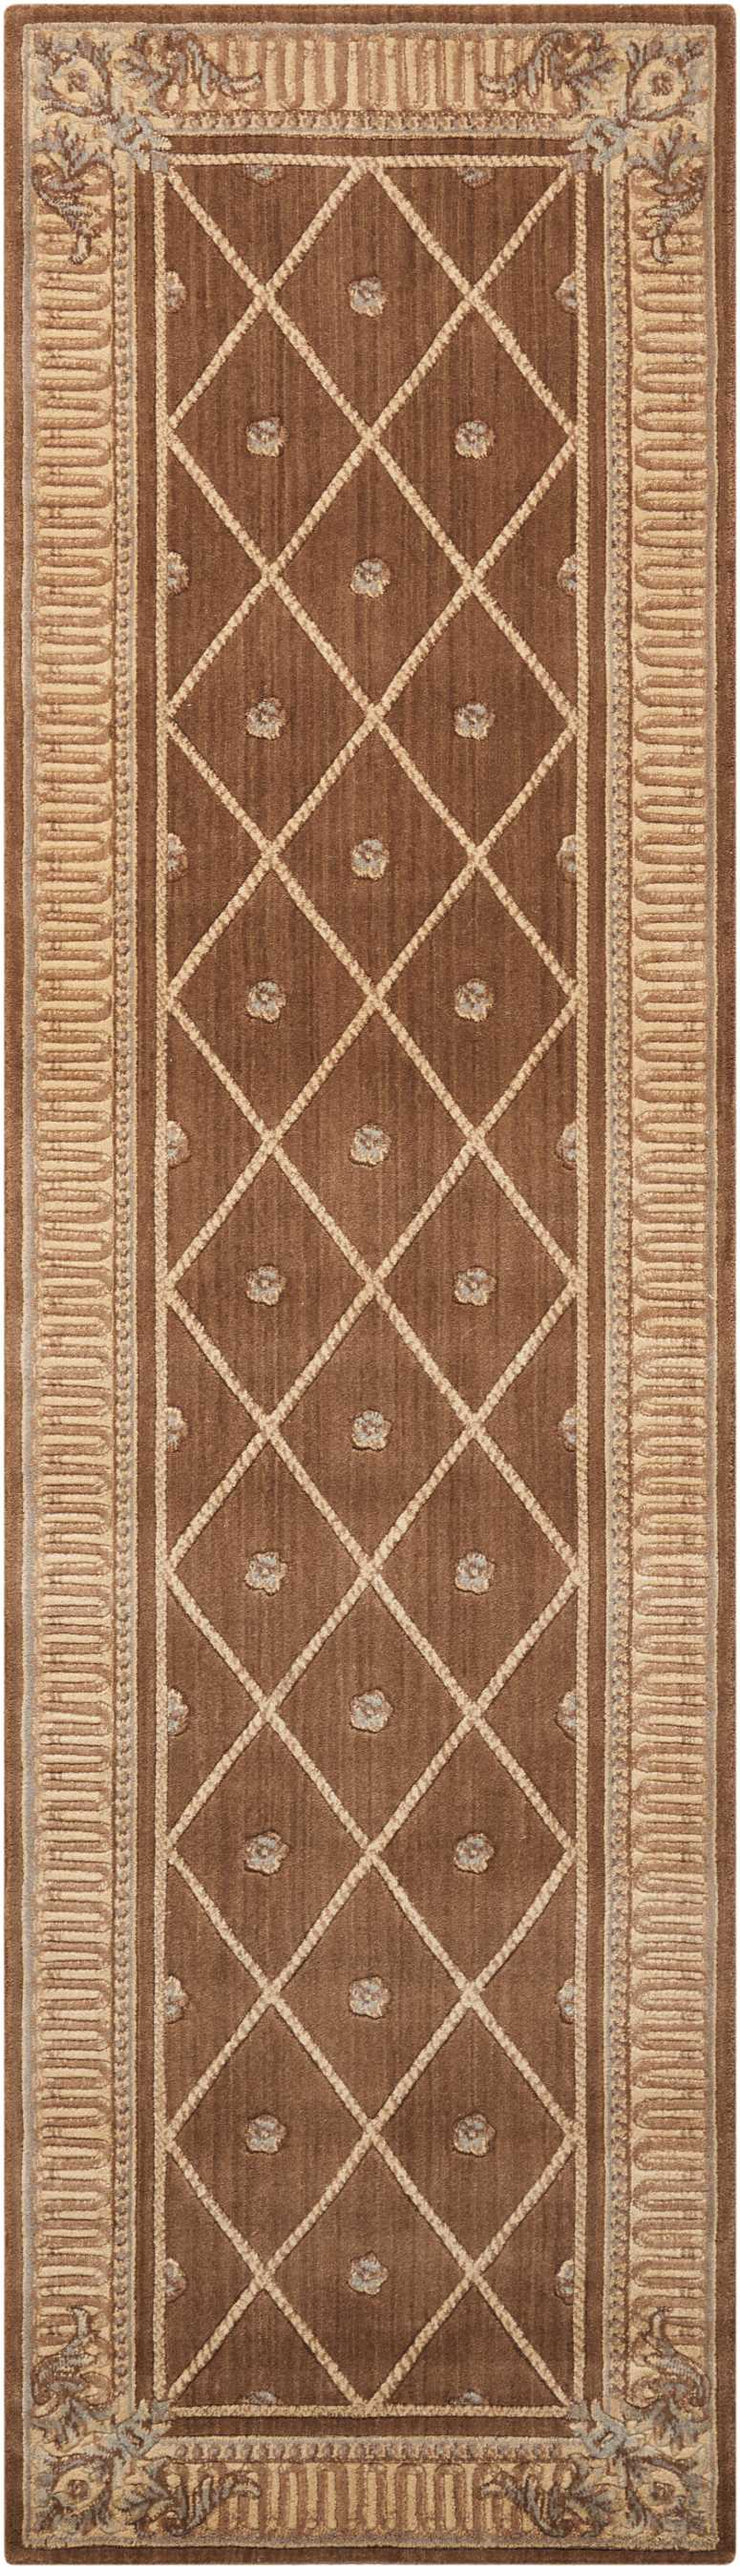 ashton house mink rug by nourison nsn 099446012036 2